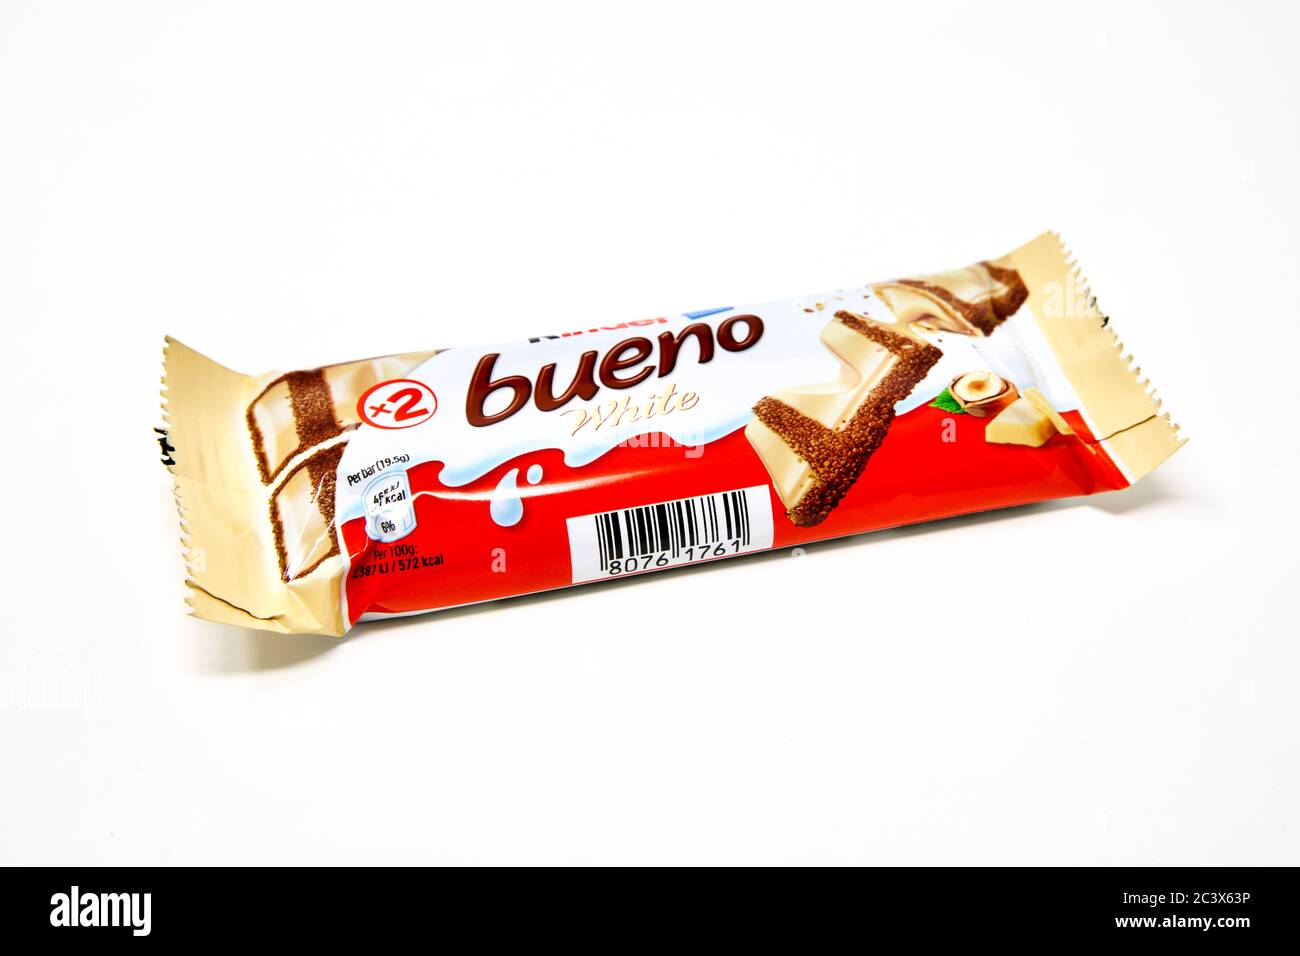 Kinder Bueno White Chocolate Bar Stock Photo